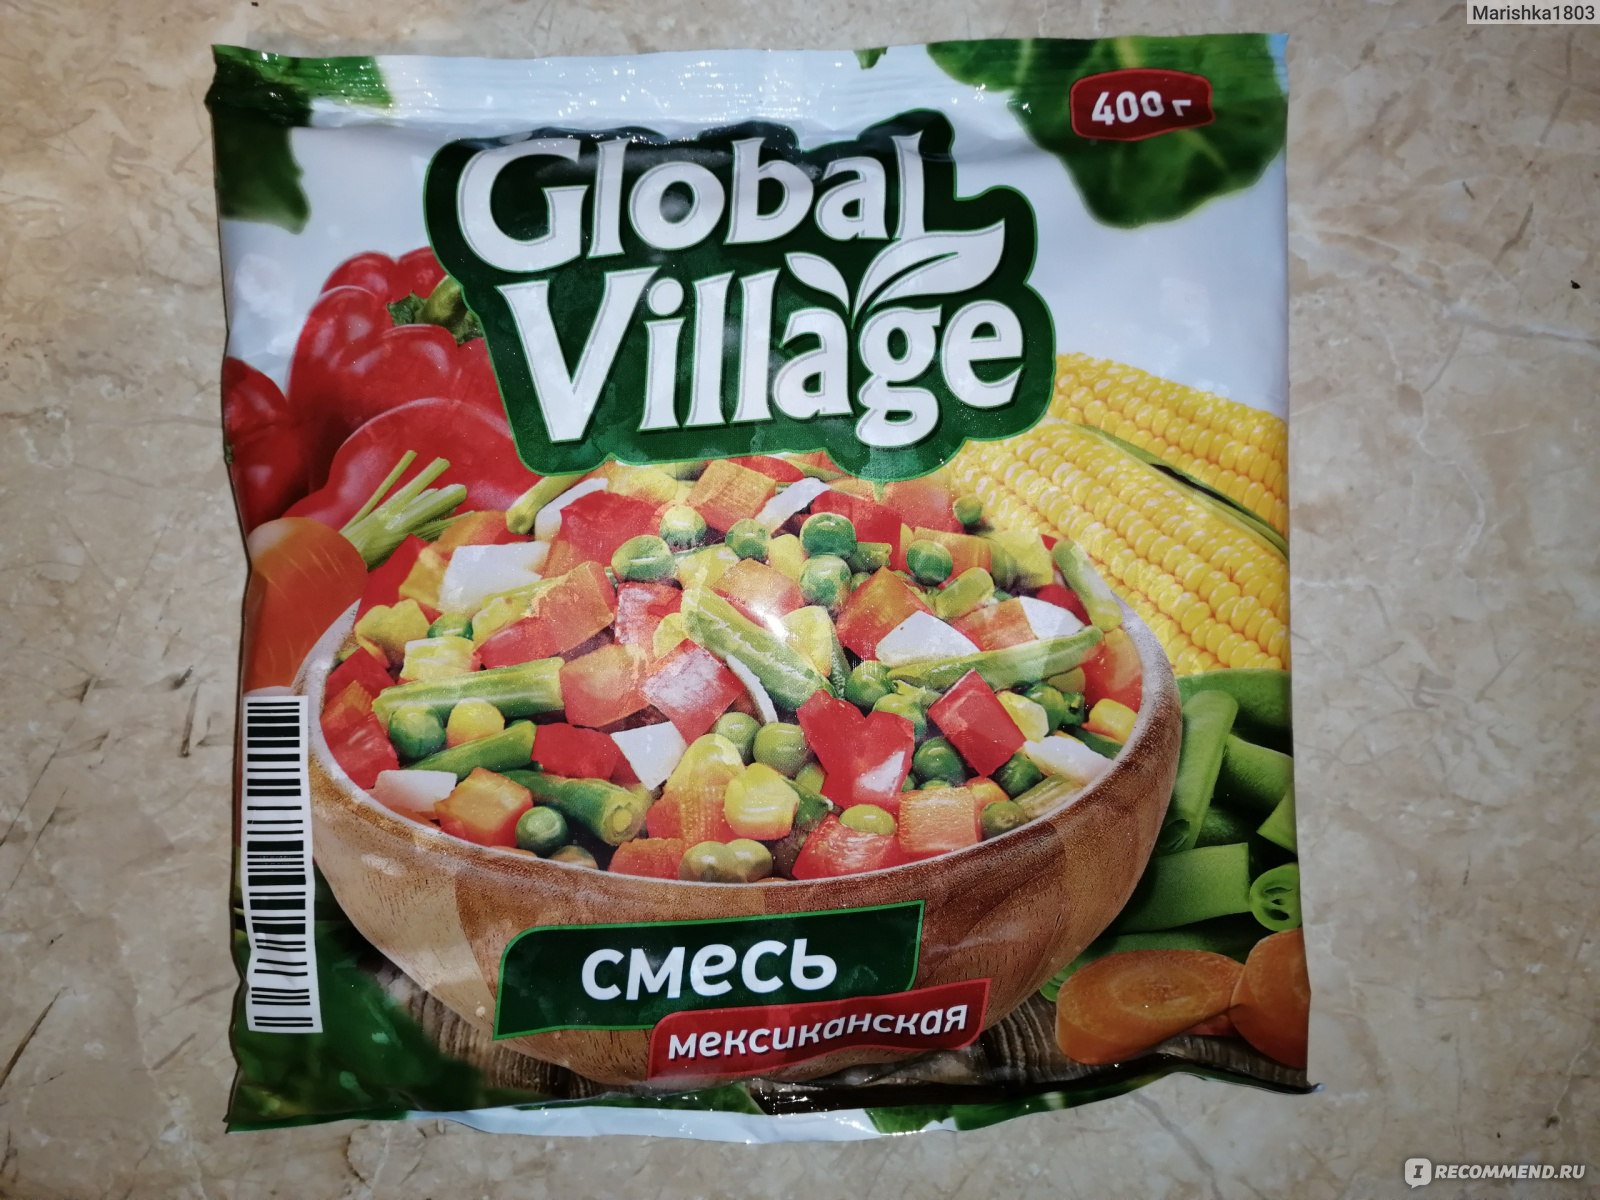 Global village суп. Овощная смесь Глобал Вилладж 8 овощей. Мексиканская смесь овощей Global Village. Глобал Вилладж Мексиканская смесь. Смесь овощная Global Village Мексиканская 400г.